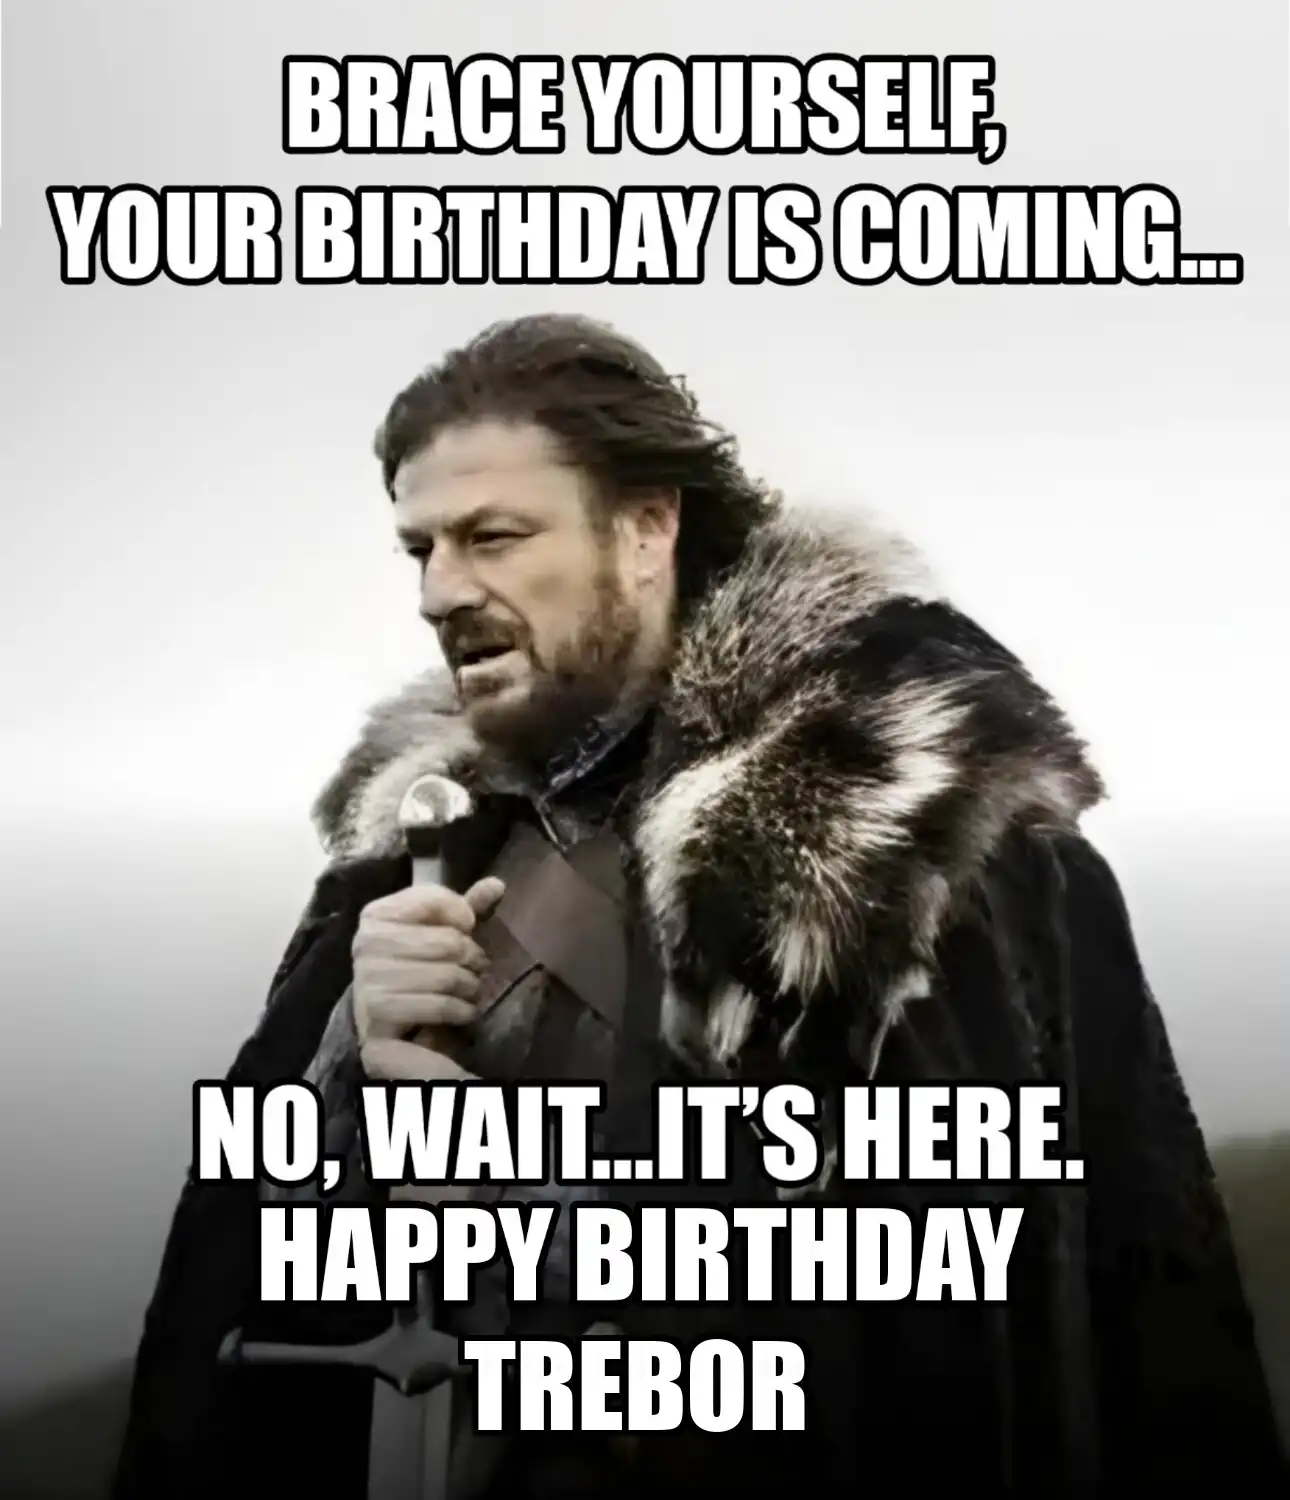 Happy Birthday Trebor Brace Yourself Your Birthday Is Coming Meme